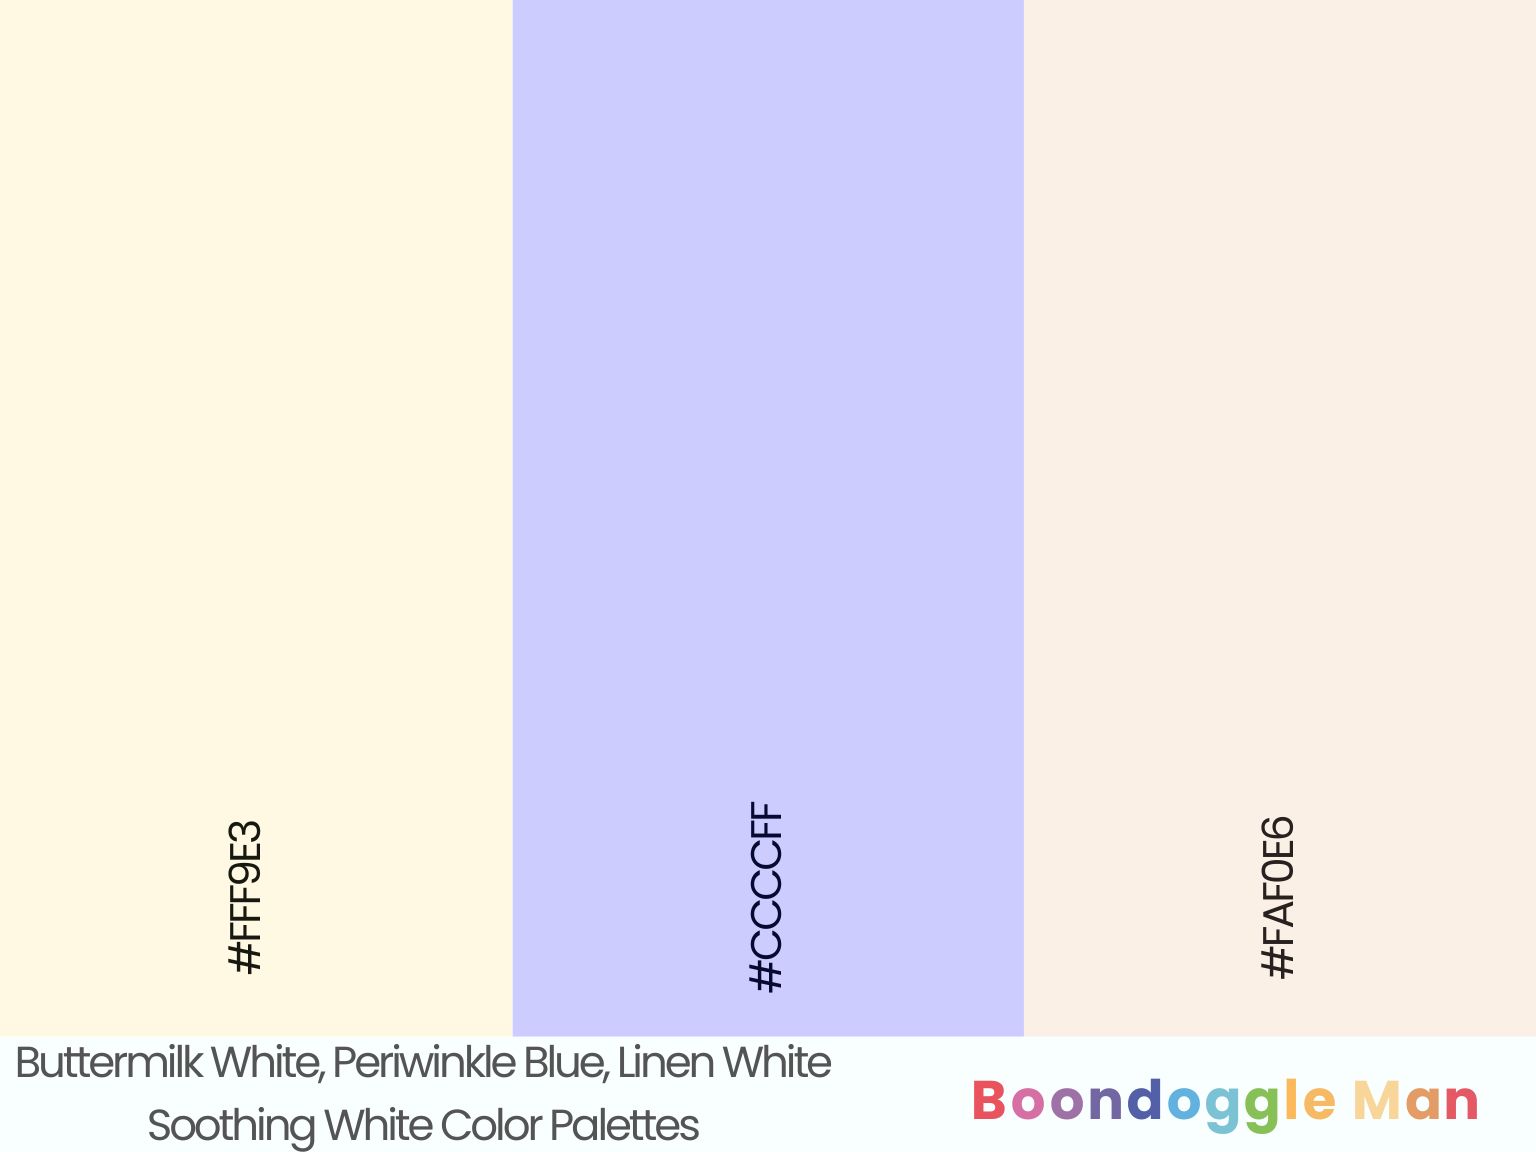 Buttermilk White, Periwinkle Blue, Linen White